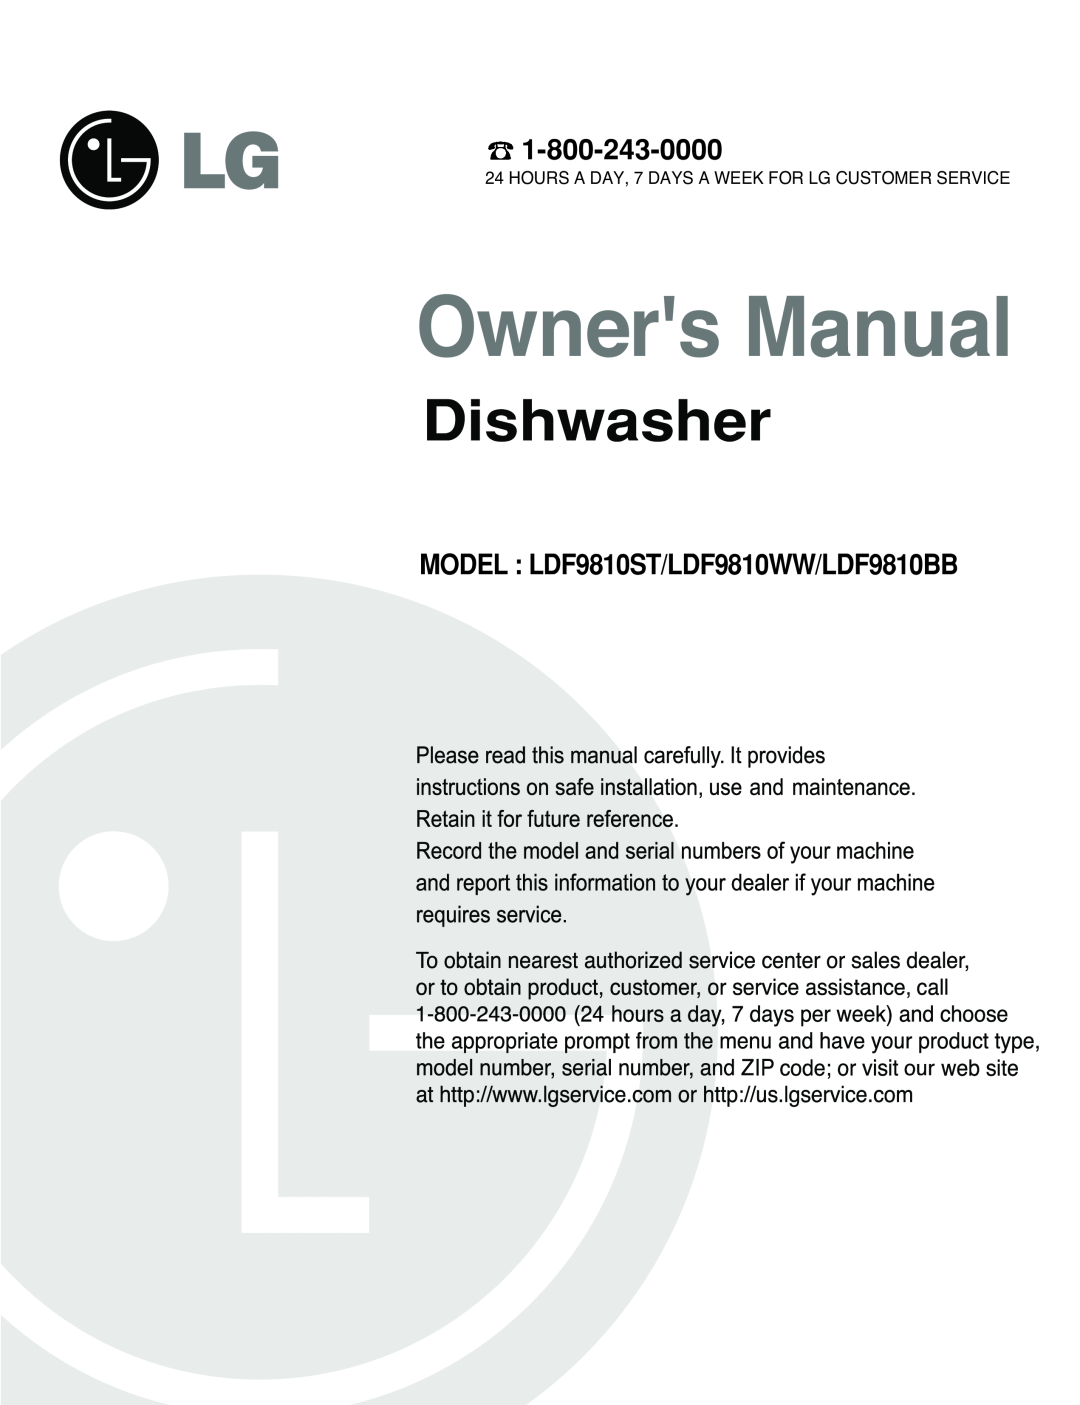 LG Electronics manual MODEL LDF9810ST/LDF9810WW/LDF9810BB, Dishwasher 